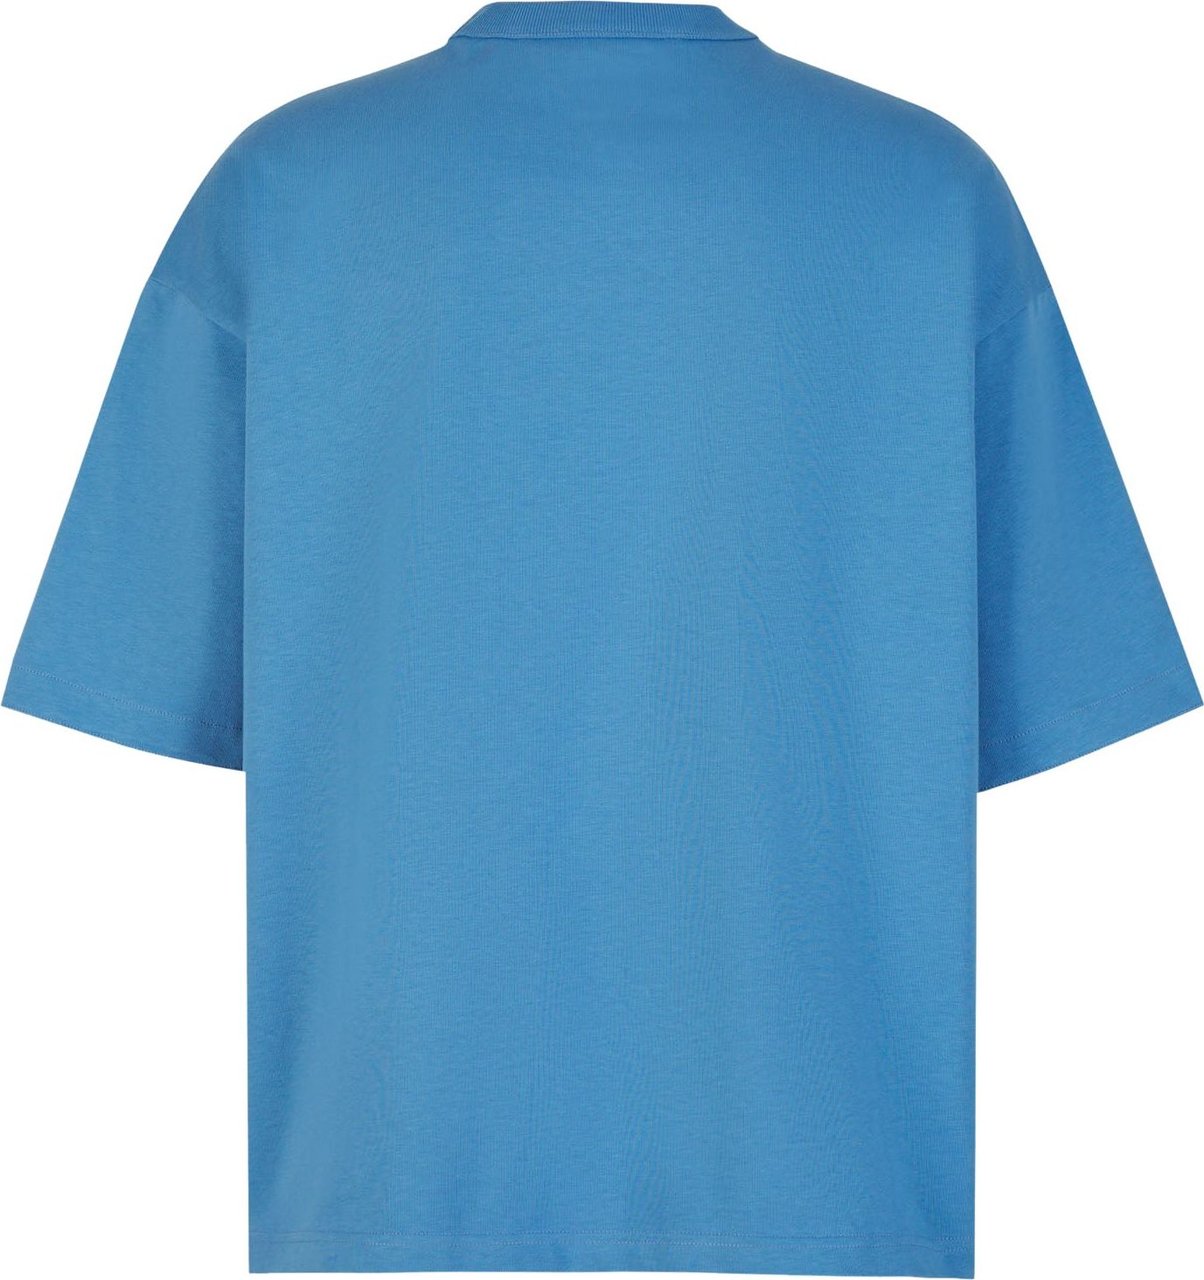 Bottega Veneta Oversized Cotton T-Shirt Blauw